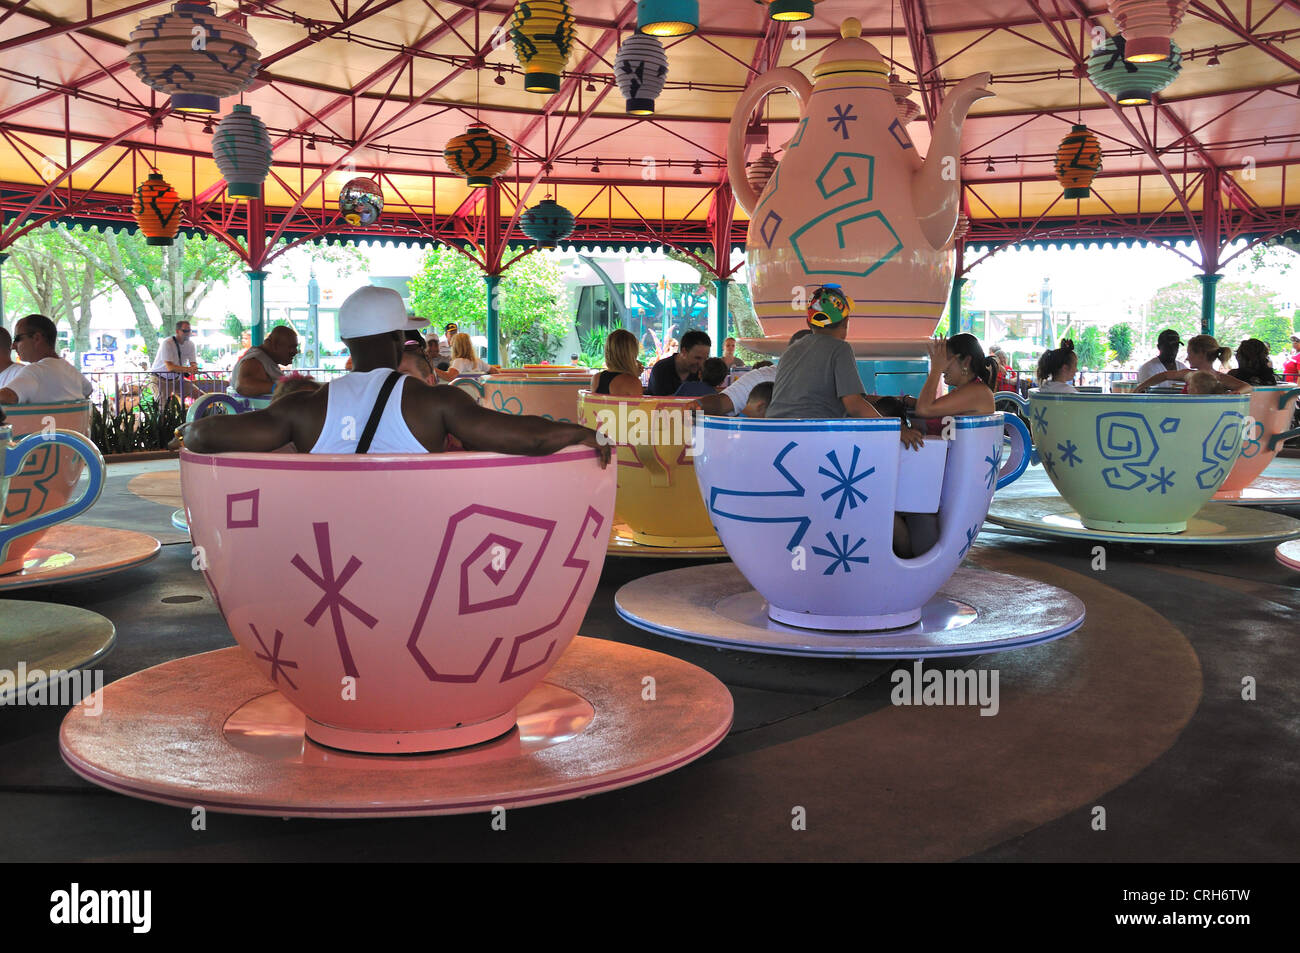 https://c8.alamy.com/comp/CRH6TW/tea-cup-ride-in-the-magic-kingdom-at-disney-world-CRH6TW.jpg